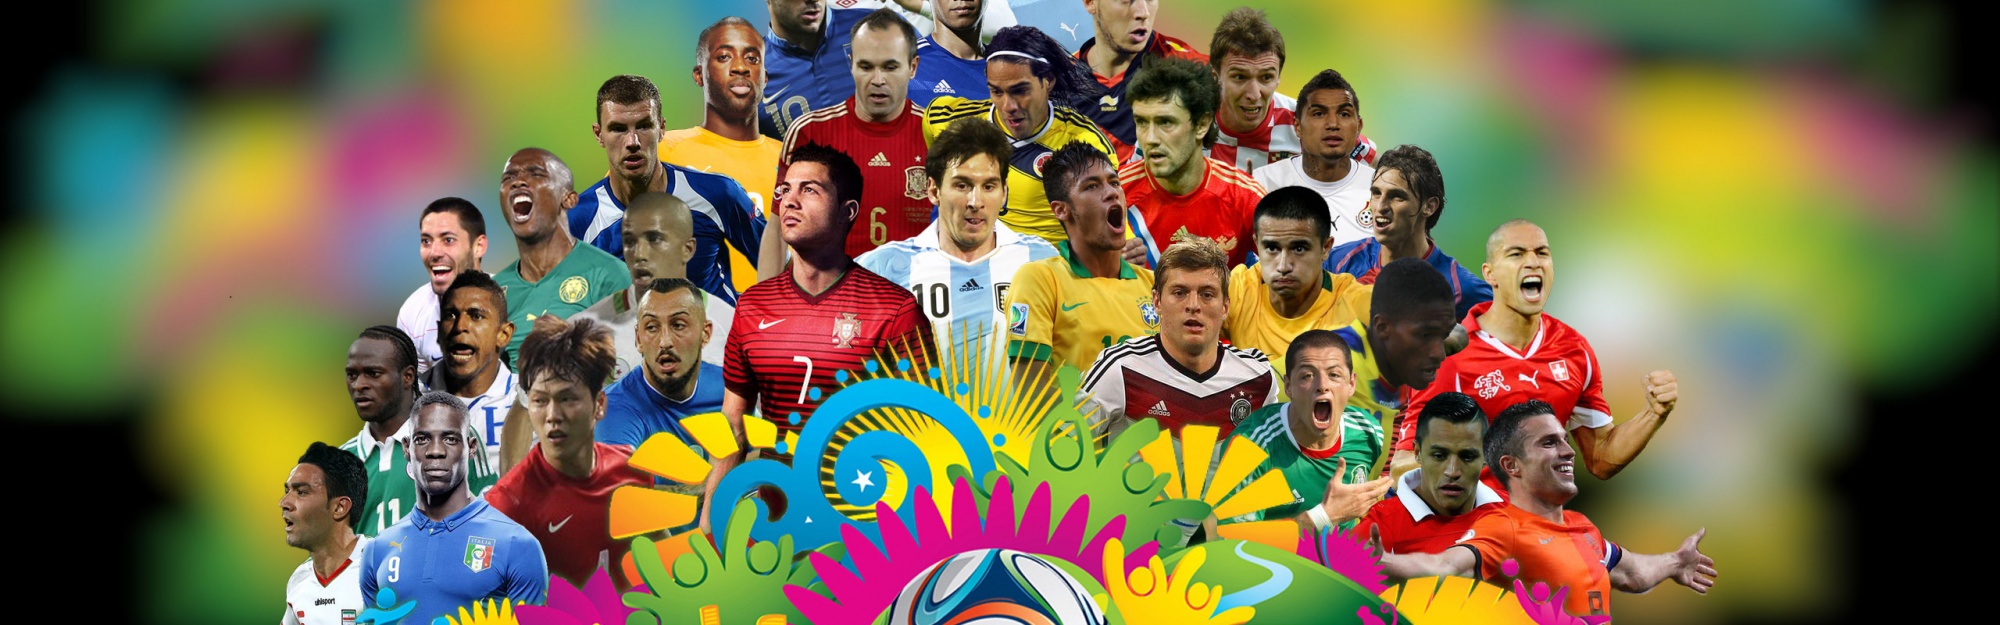 Brazil 2014 World Cup Football Stars